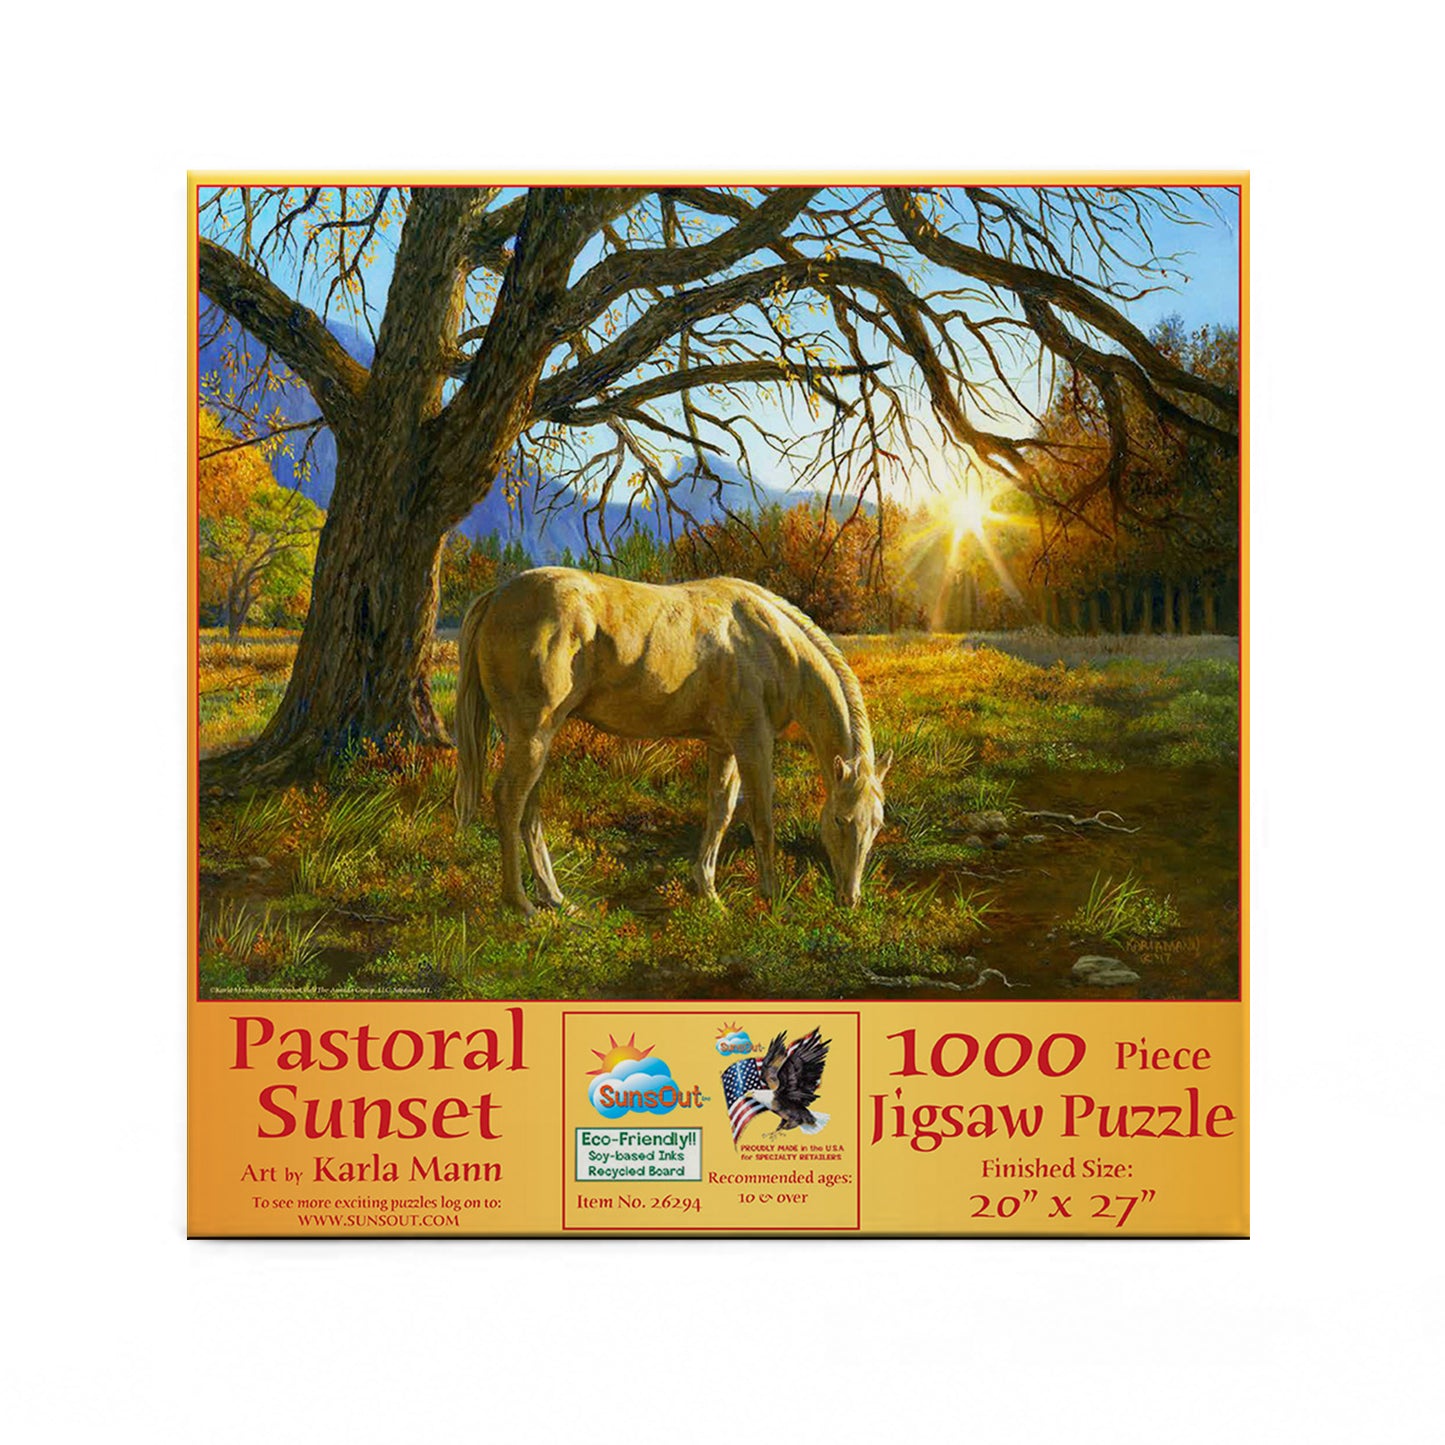 Pastoral Sunset - 1000 Piece Jigsaw Puzzle